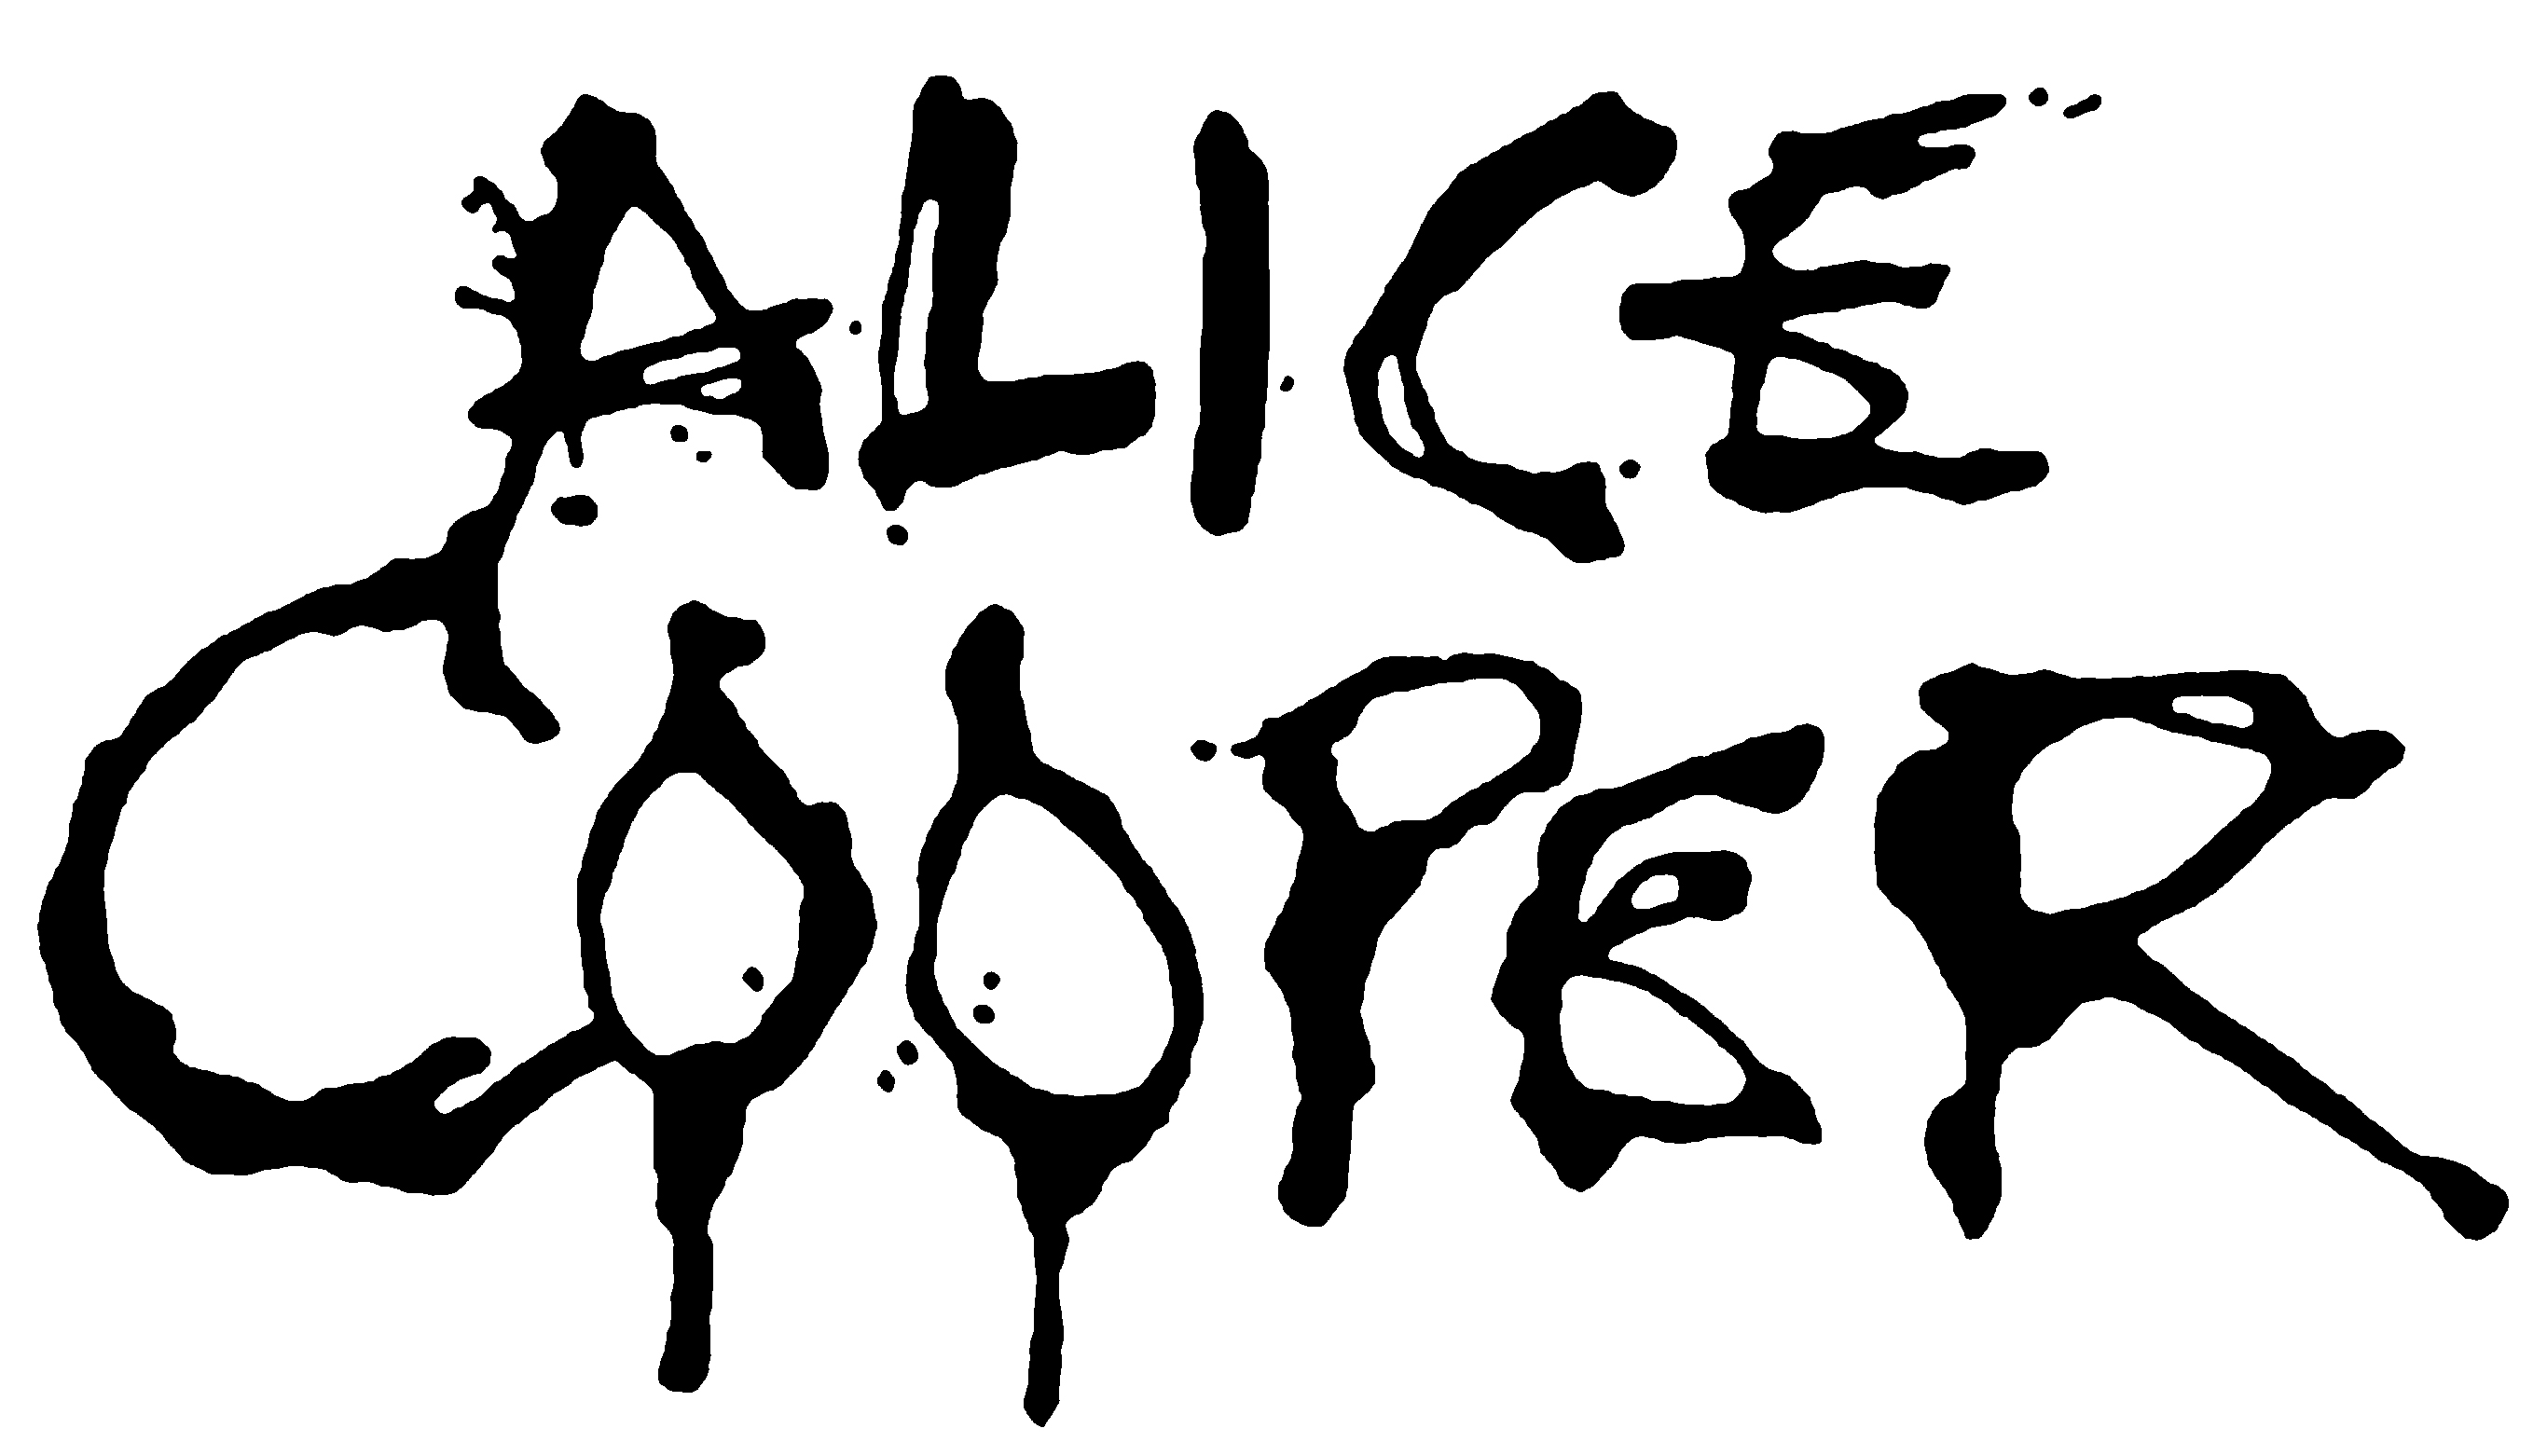 Alice Cooper Announces Additional Summer 2019 Headline Tour Dates + Announces New Stage Show